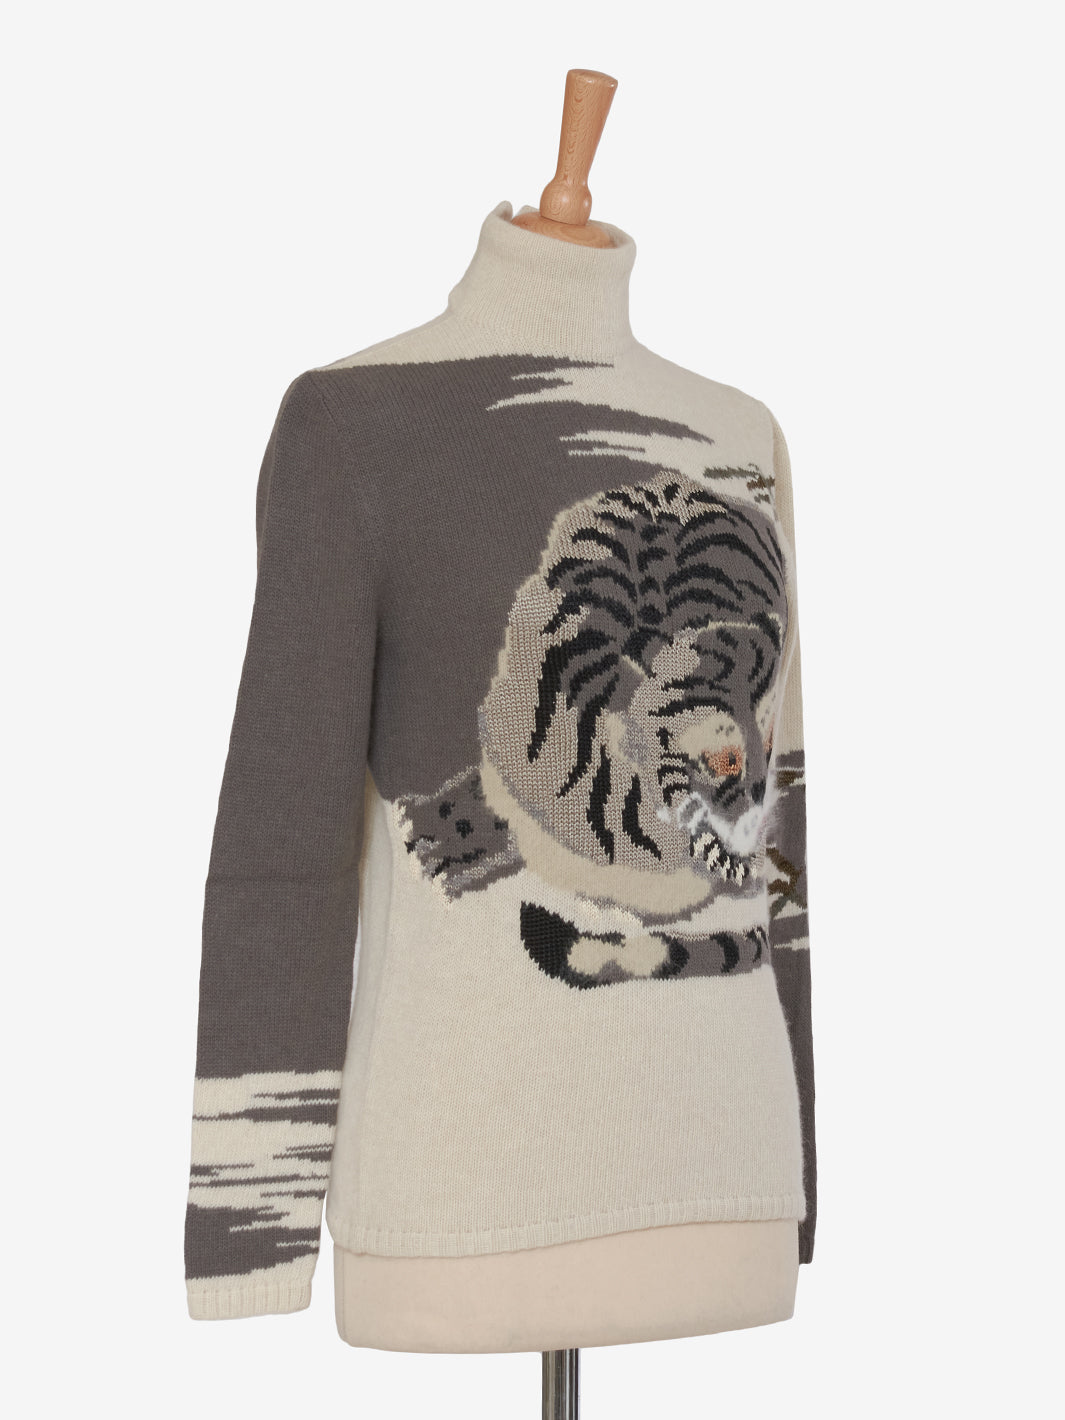 Krizia Wool mock t-shirt with hyena embroidery